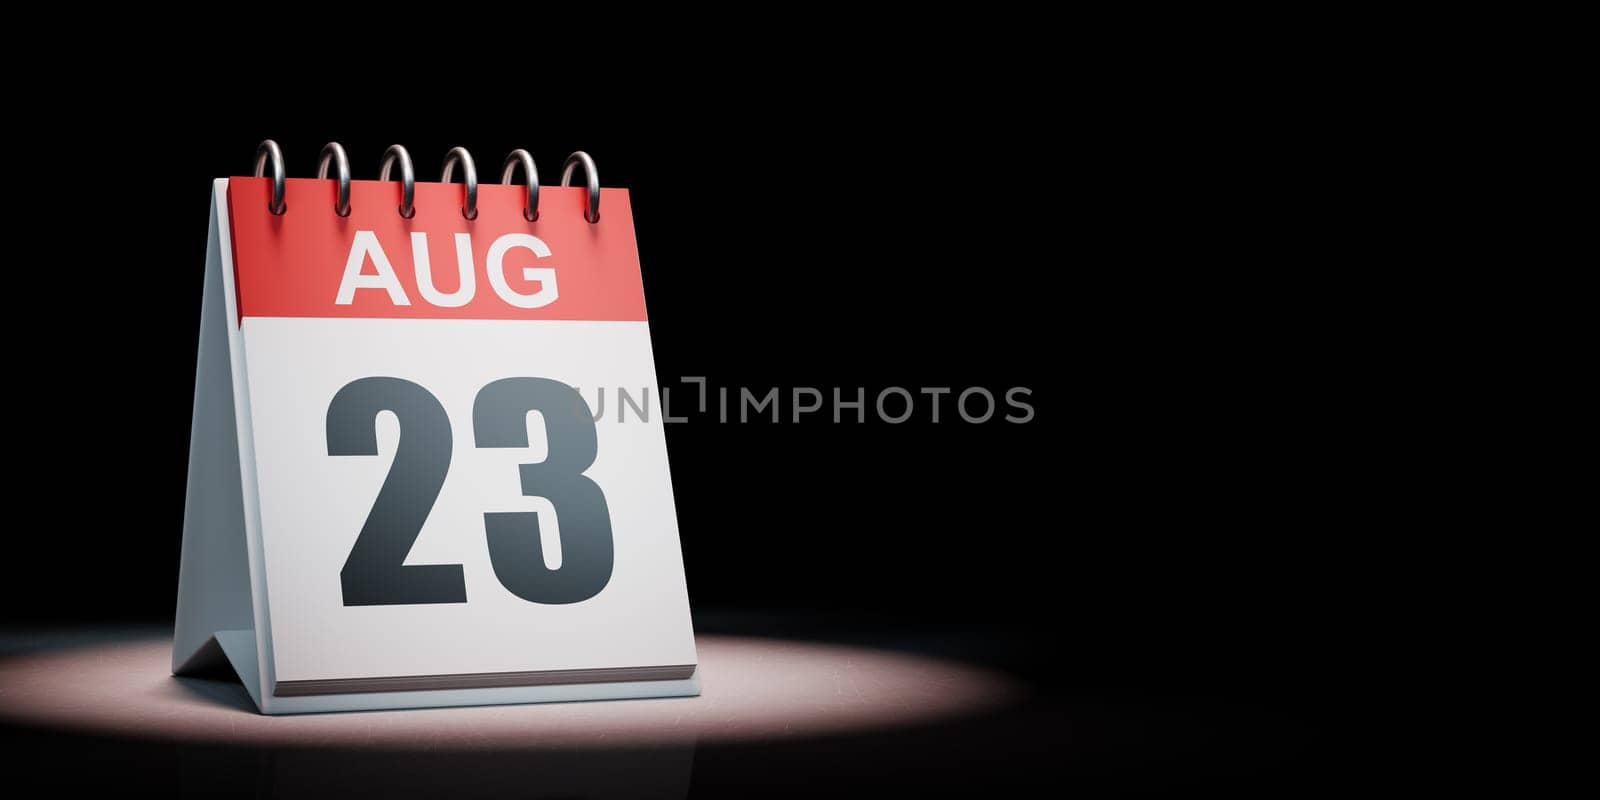 August 23 Calendar Spotlighted on Black Background by make